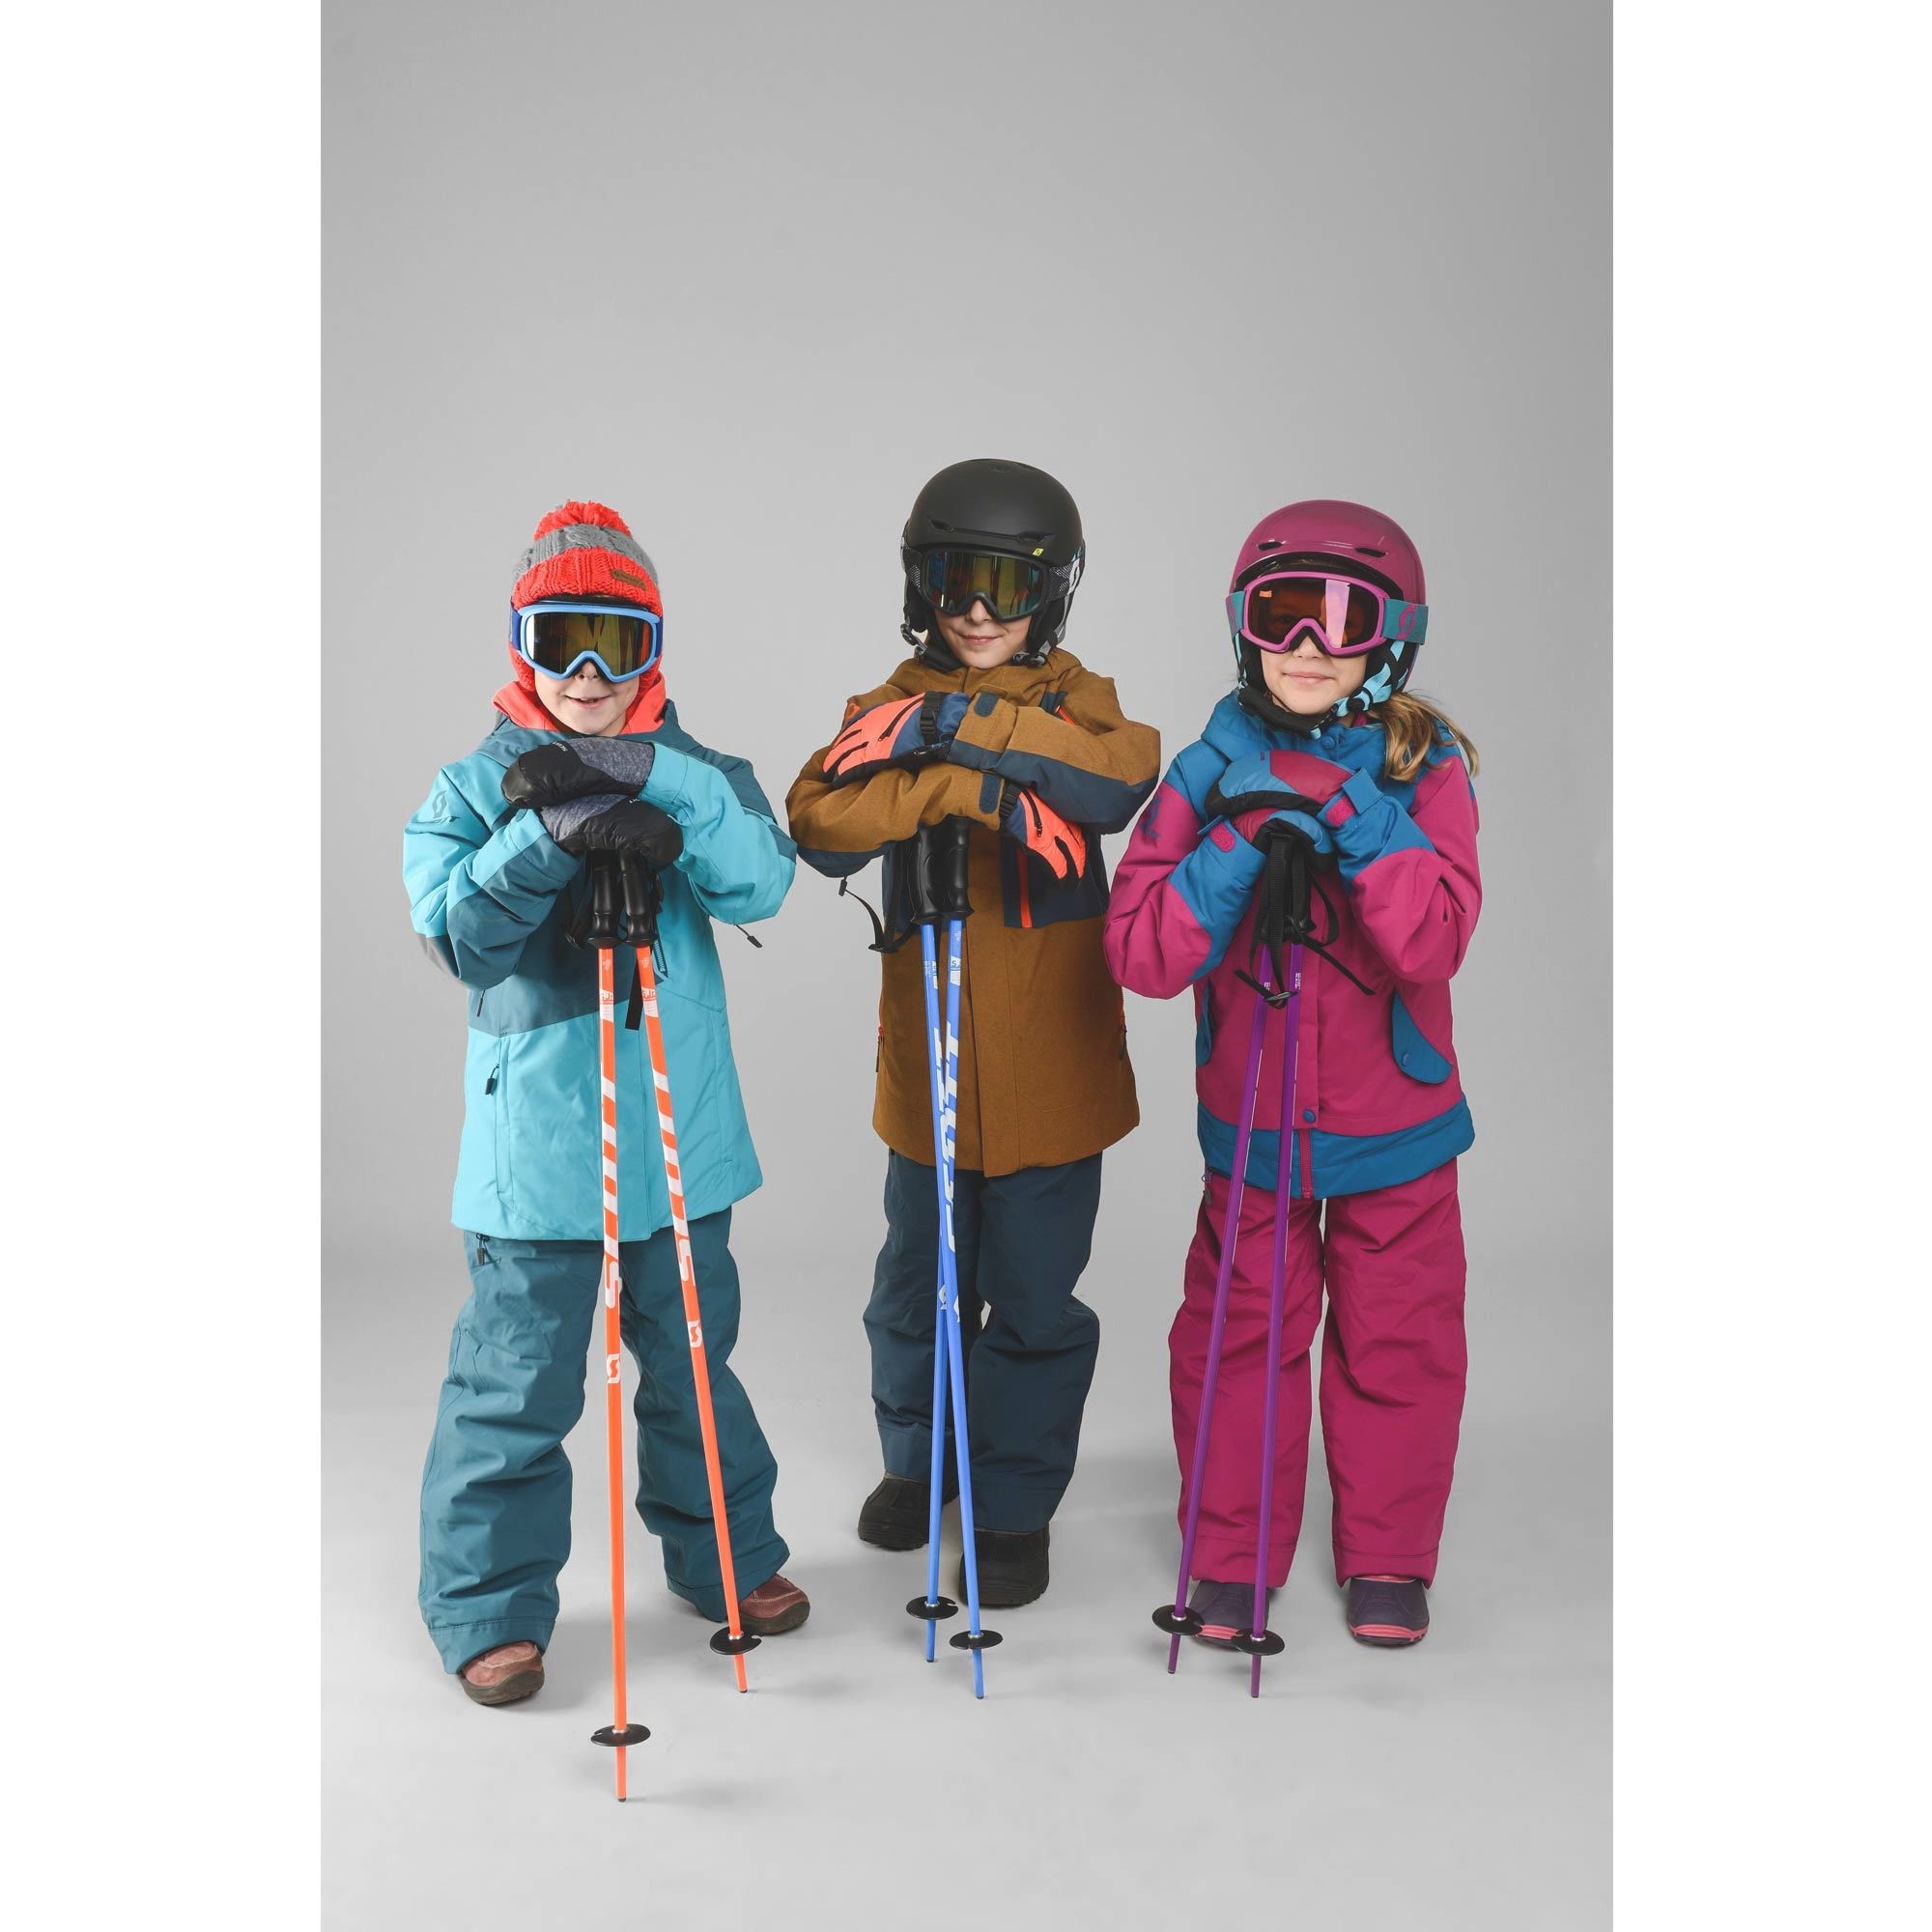 Kids' Ski Jackets & Pants, Kids Ski Suits